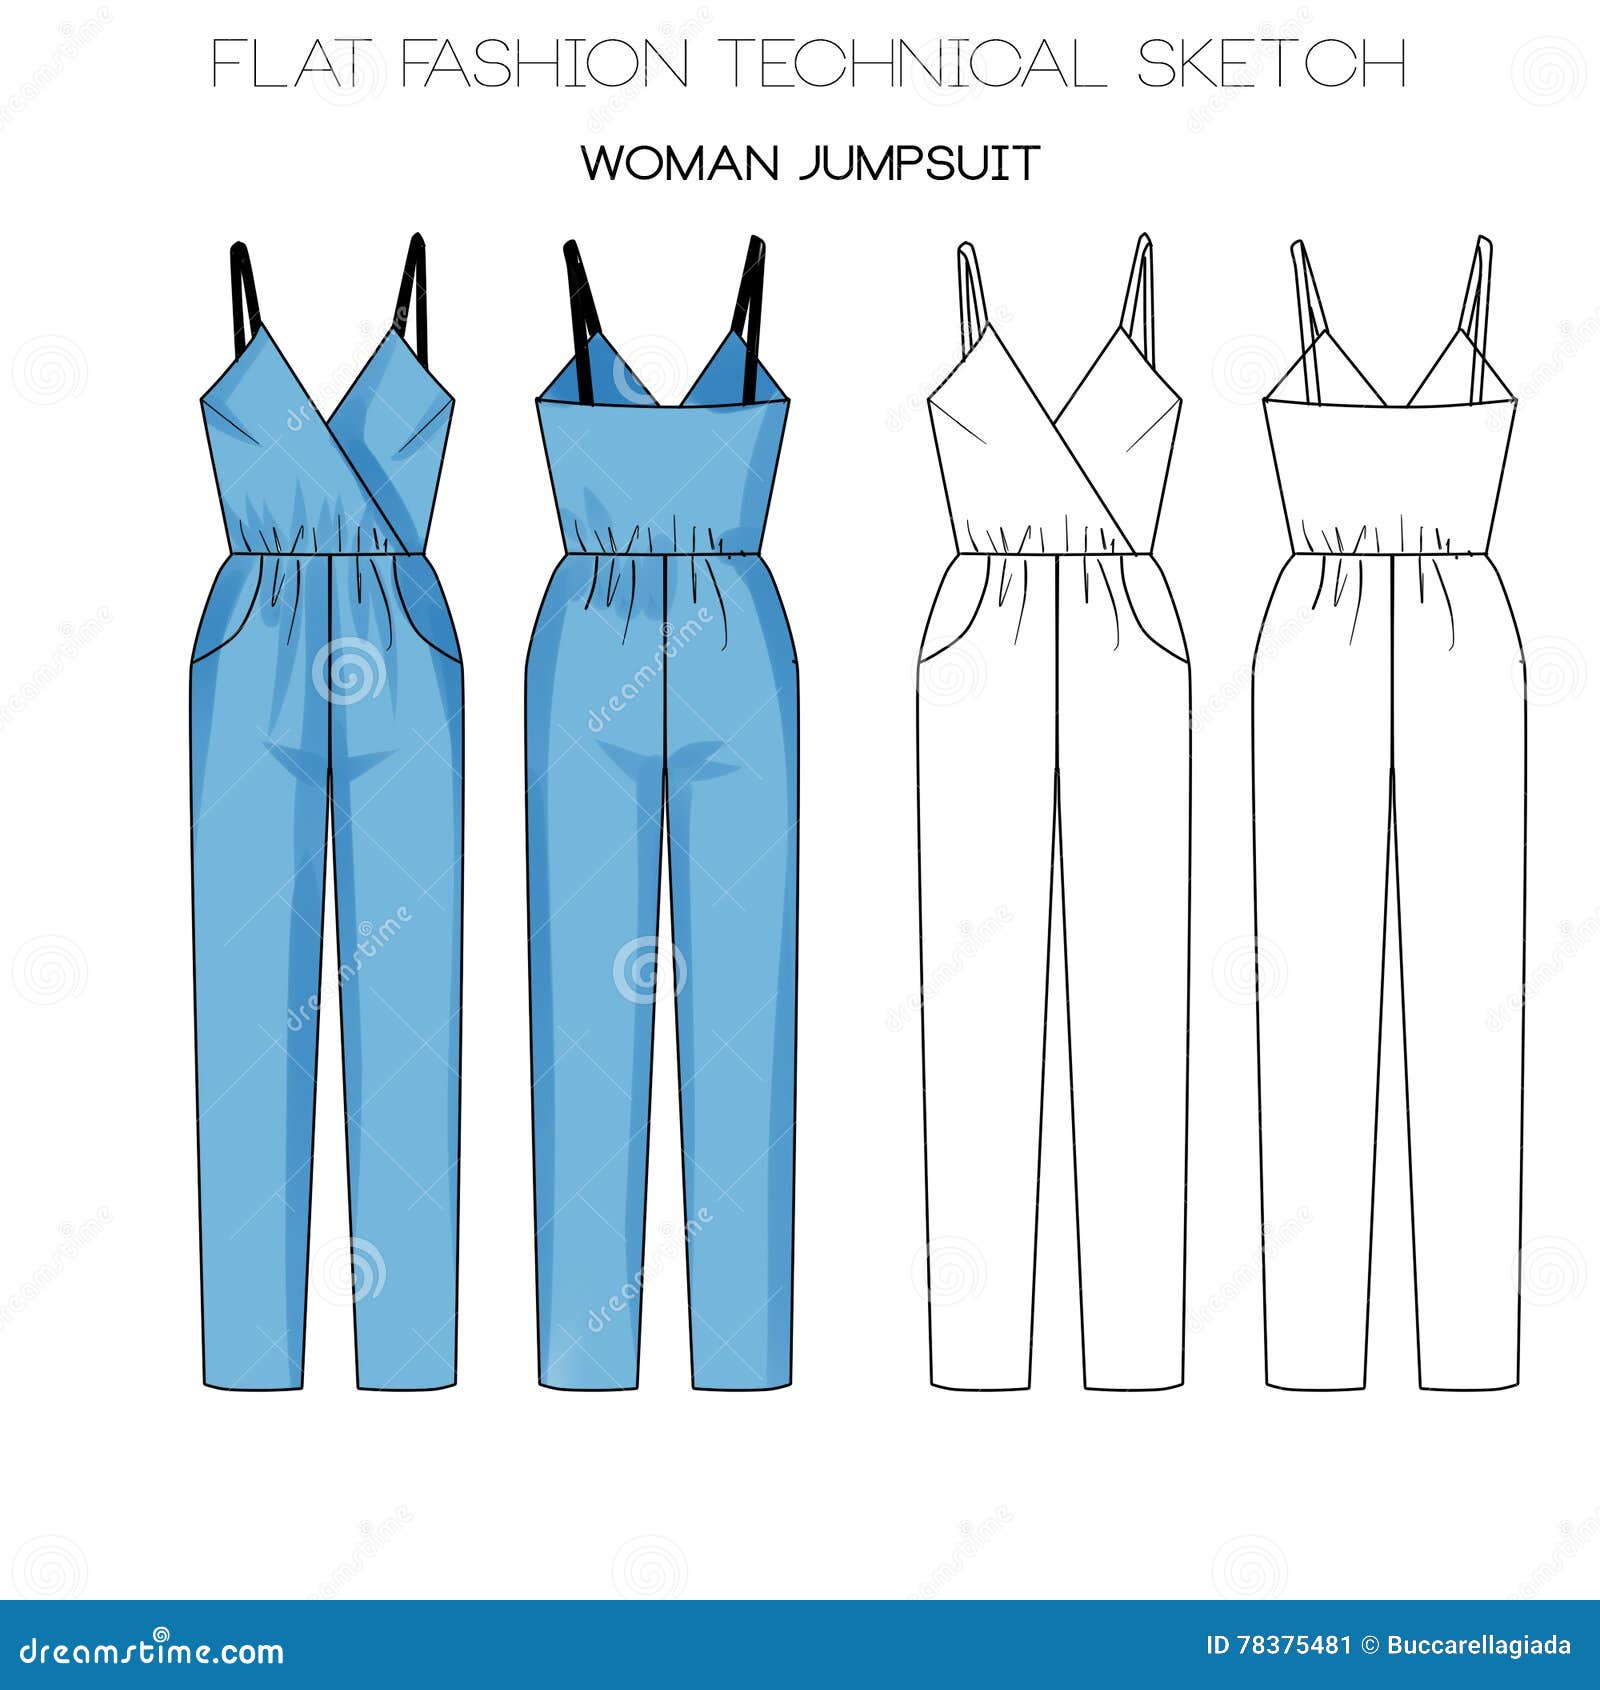 Flat Fashion Technical Sketch - Woman Jumpsuit Stock Image ...